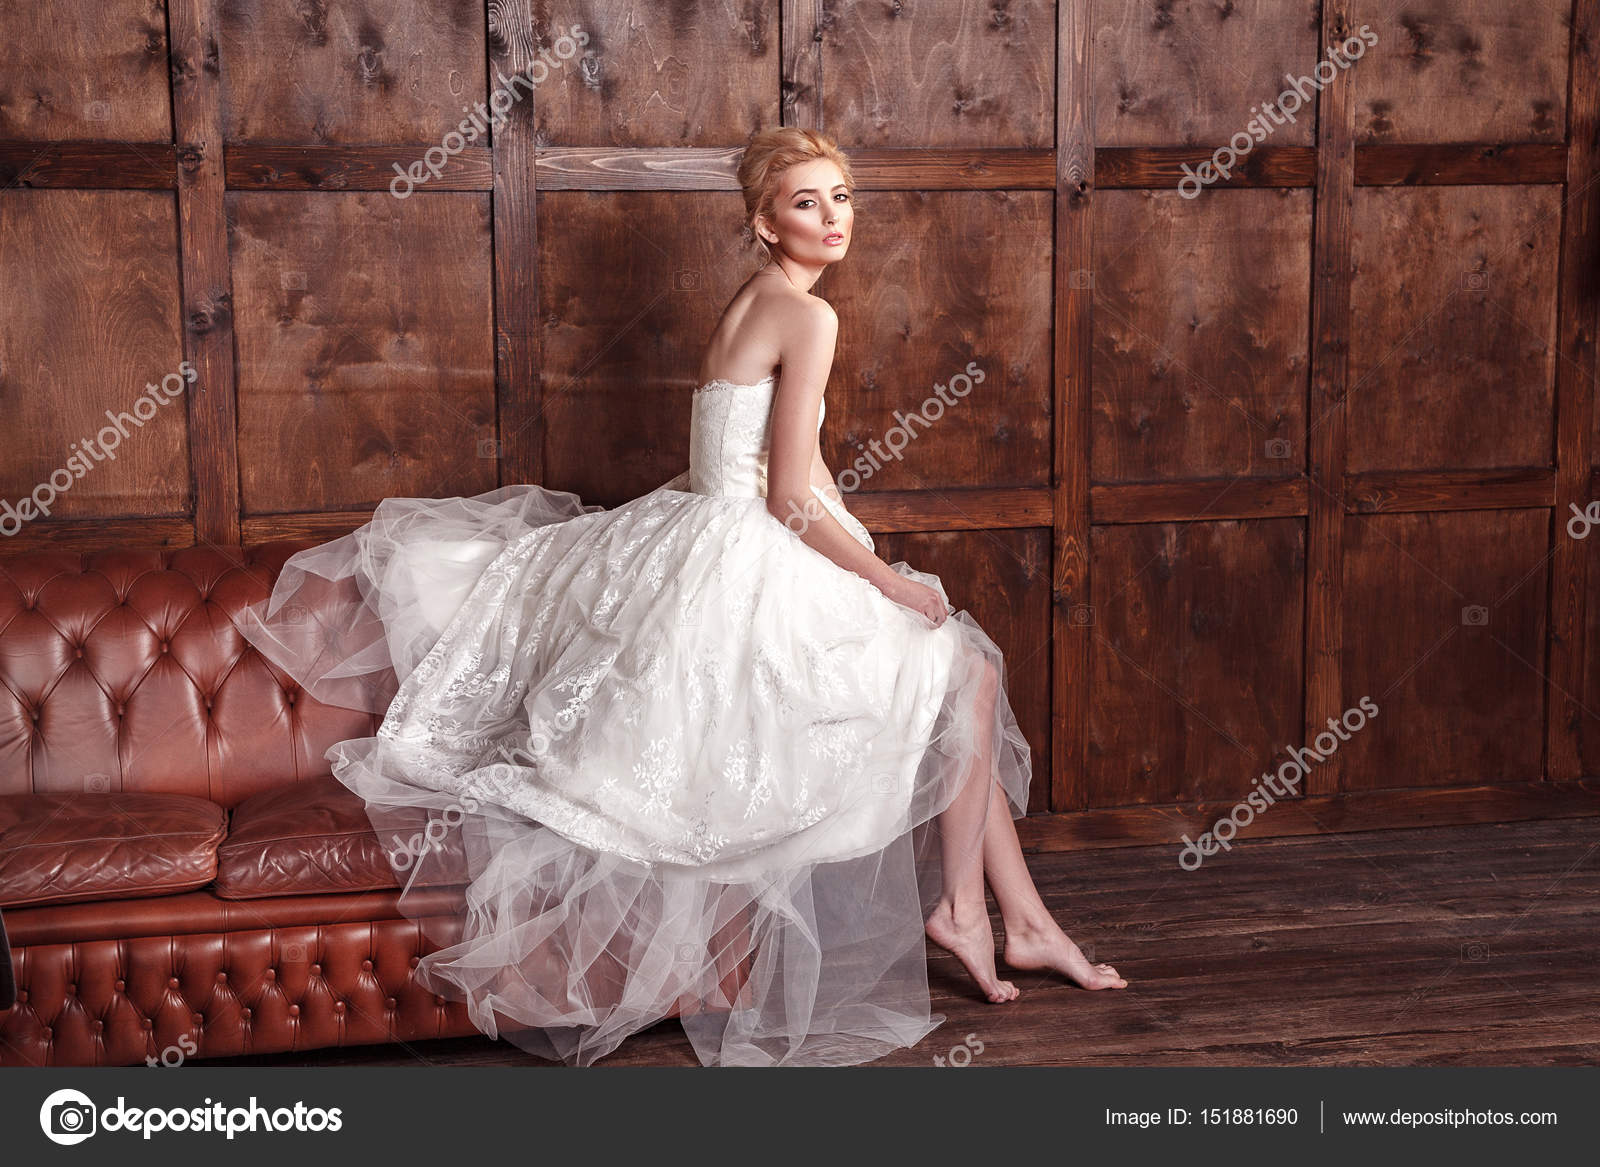 depositphotos 151881690 stock photo fashion beauty bridal shooting beautiful